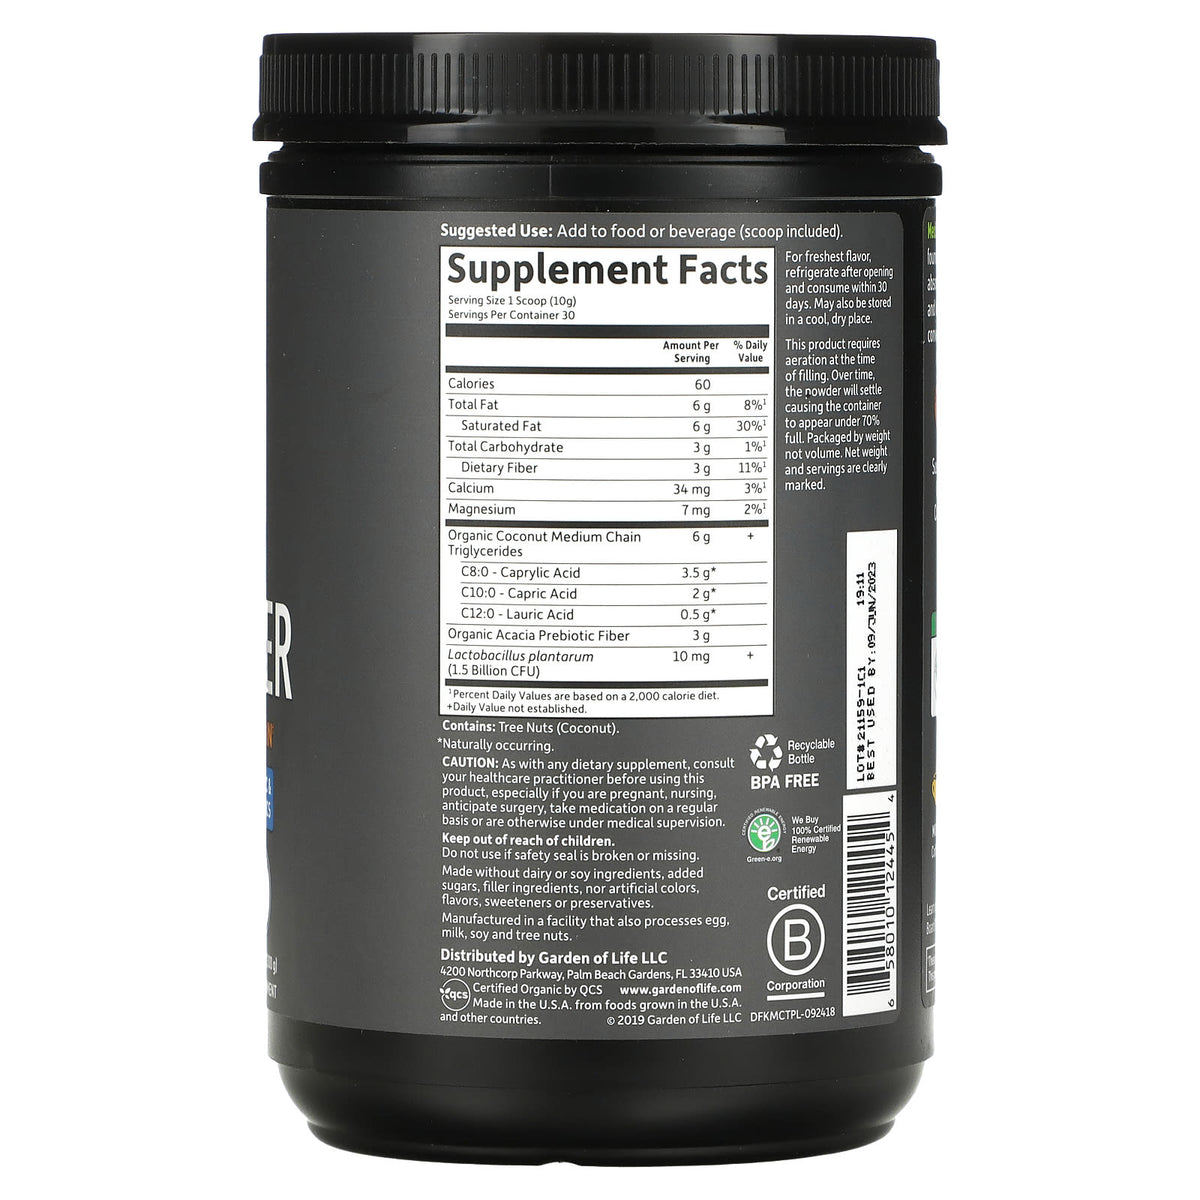 Dr. Formulated Keto, Organic MCT Powder, 10.58 oz (300 g)